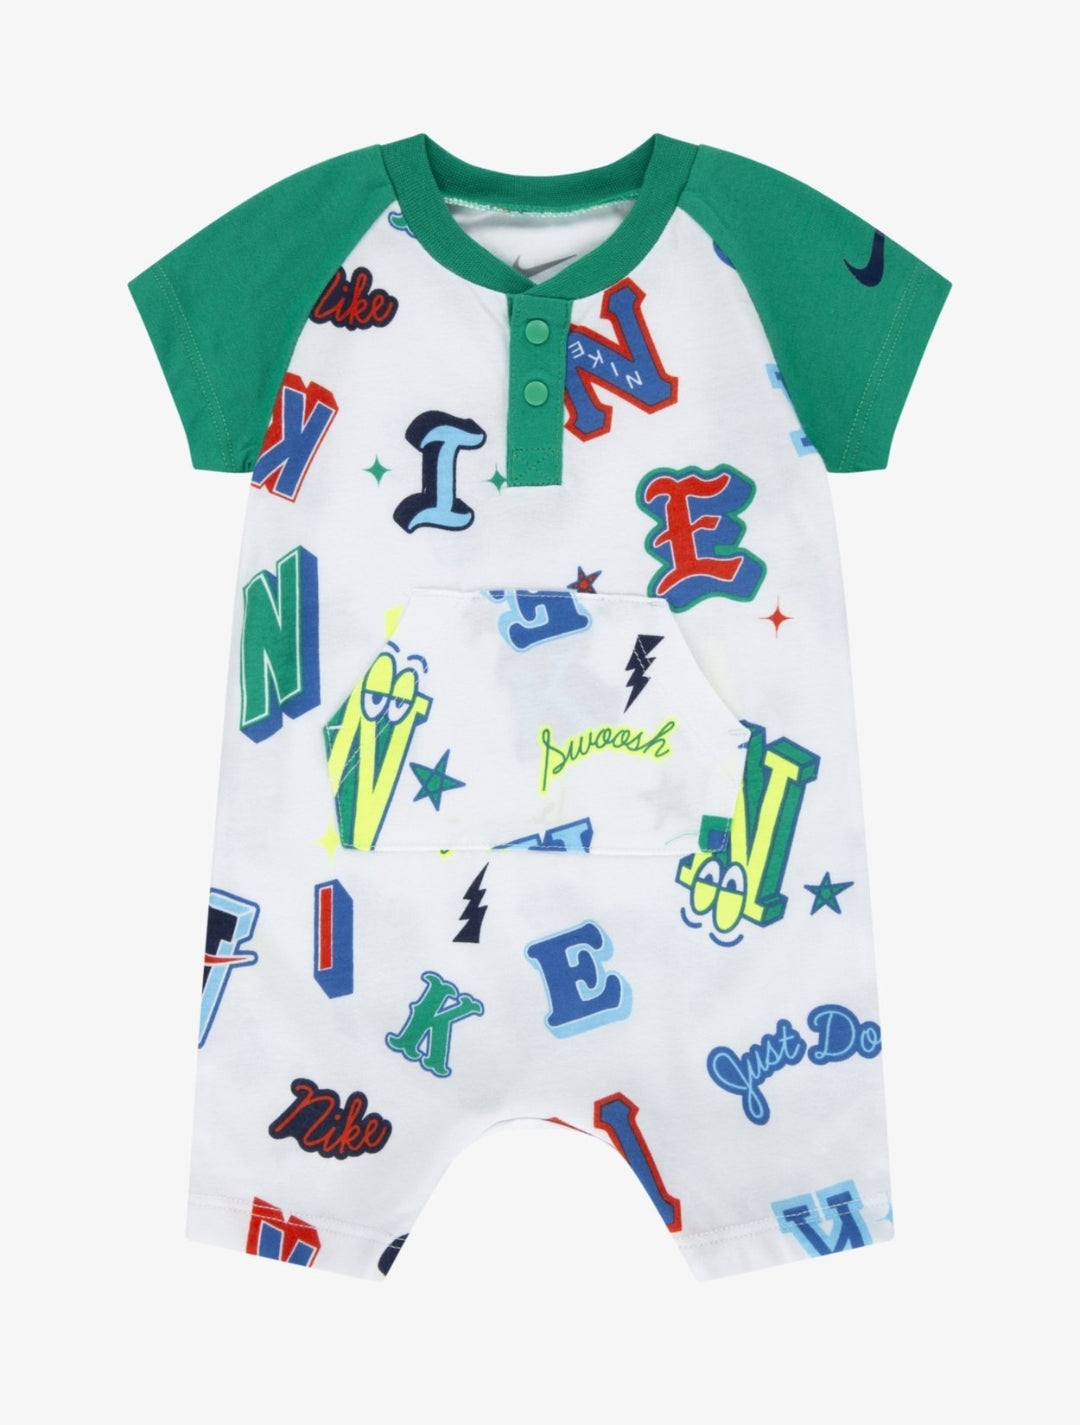 Nike Baby shorts Skort Short sleeves Green/Multi